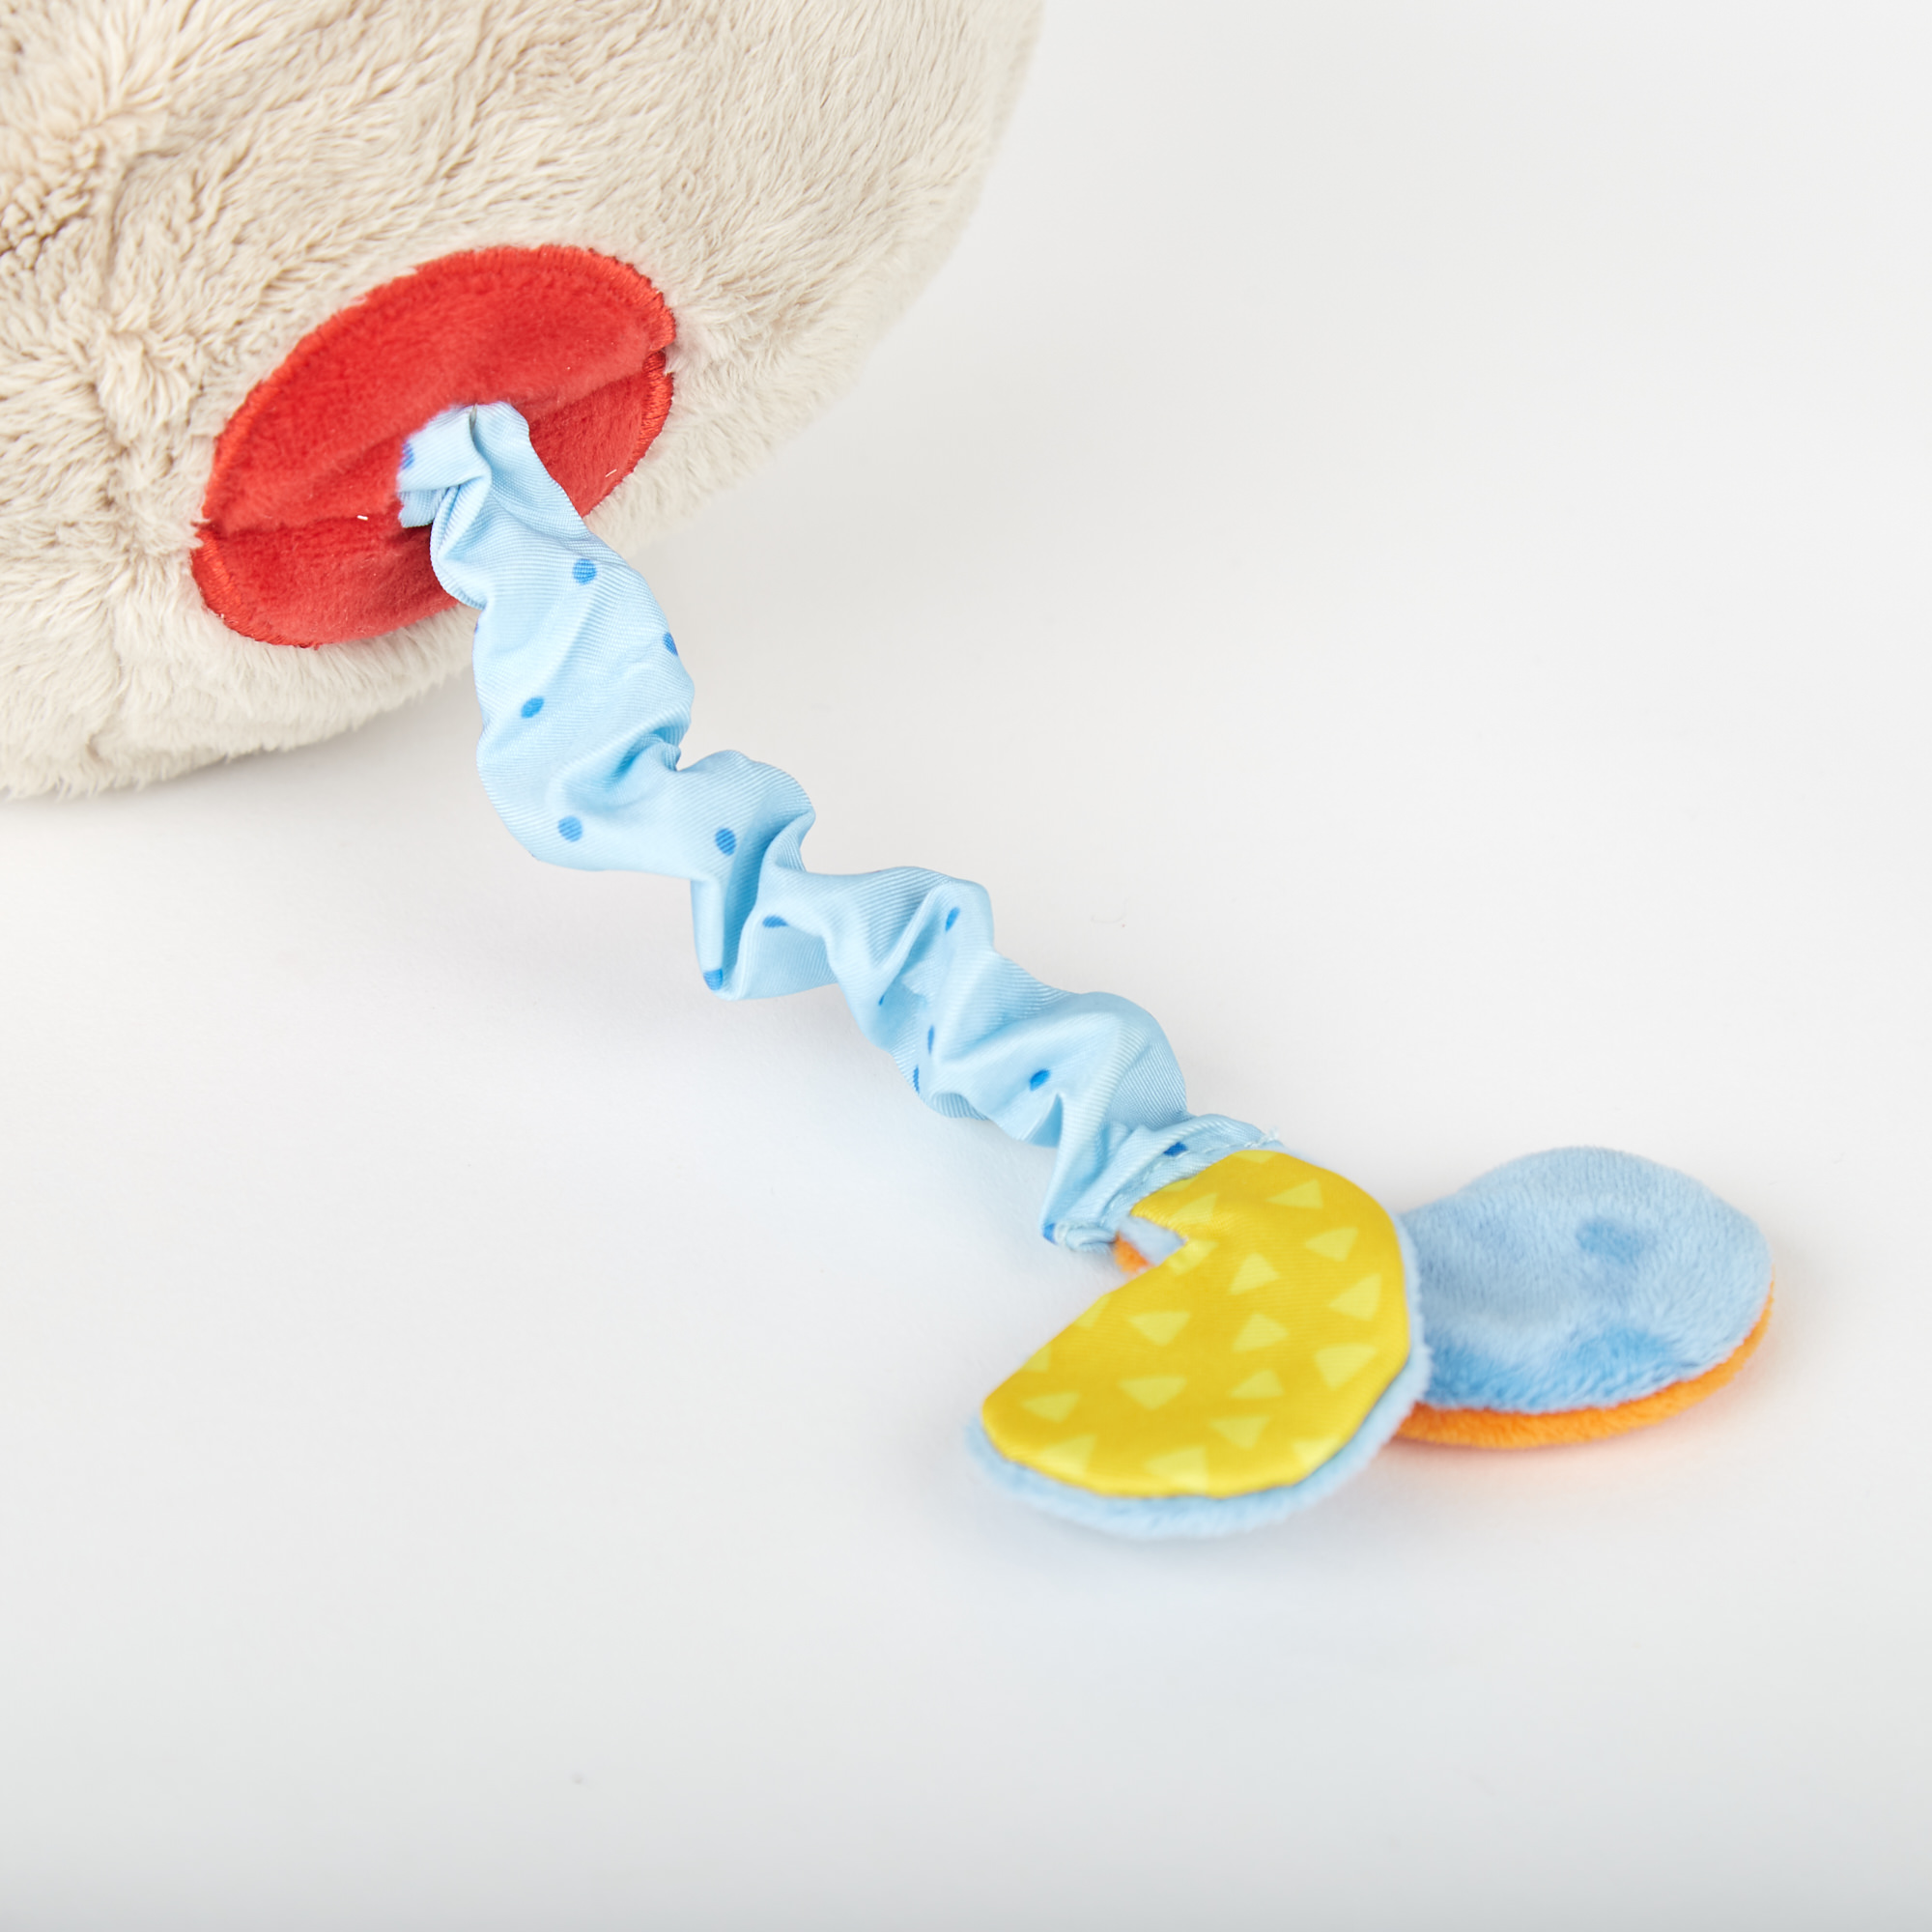 Babyspielzeug Wal mit Funktion